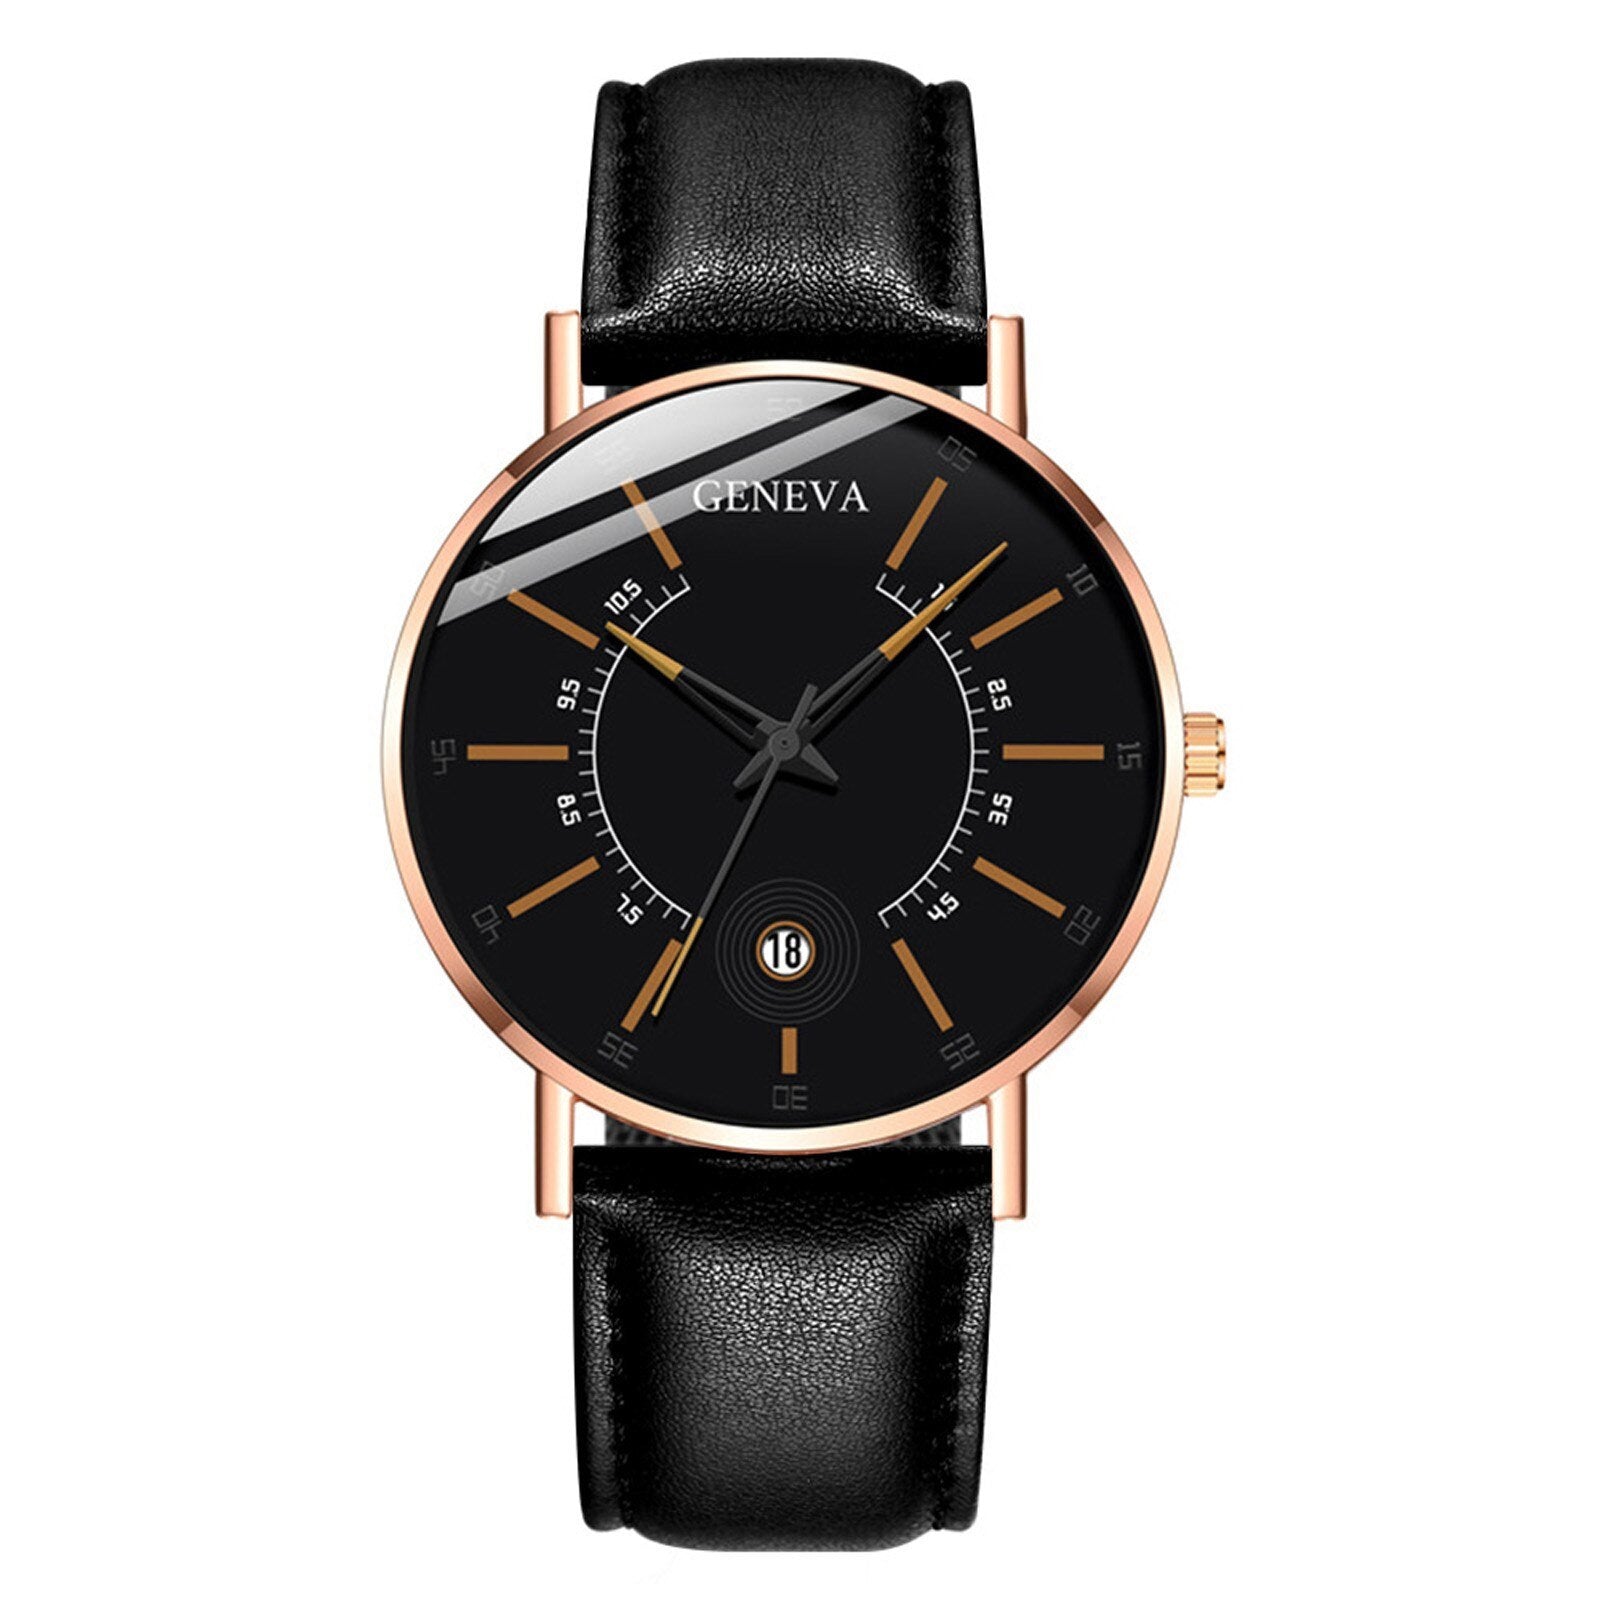 Relógio masculino Geneva minimalista 2020